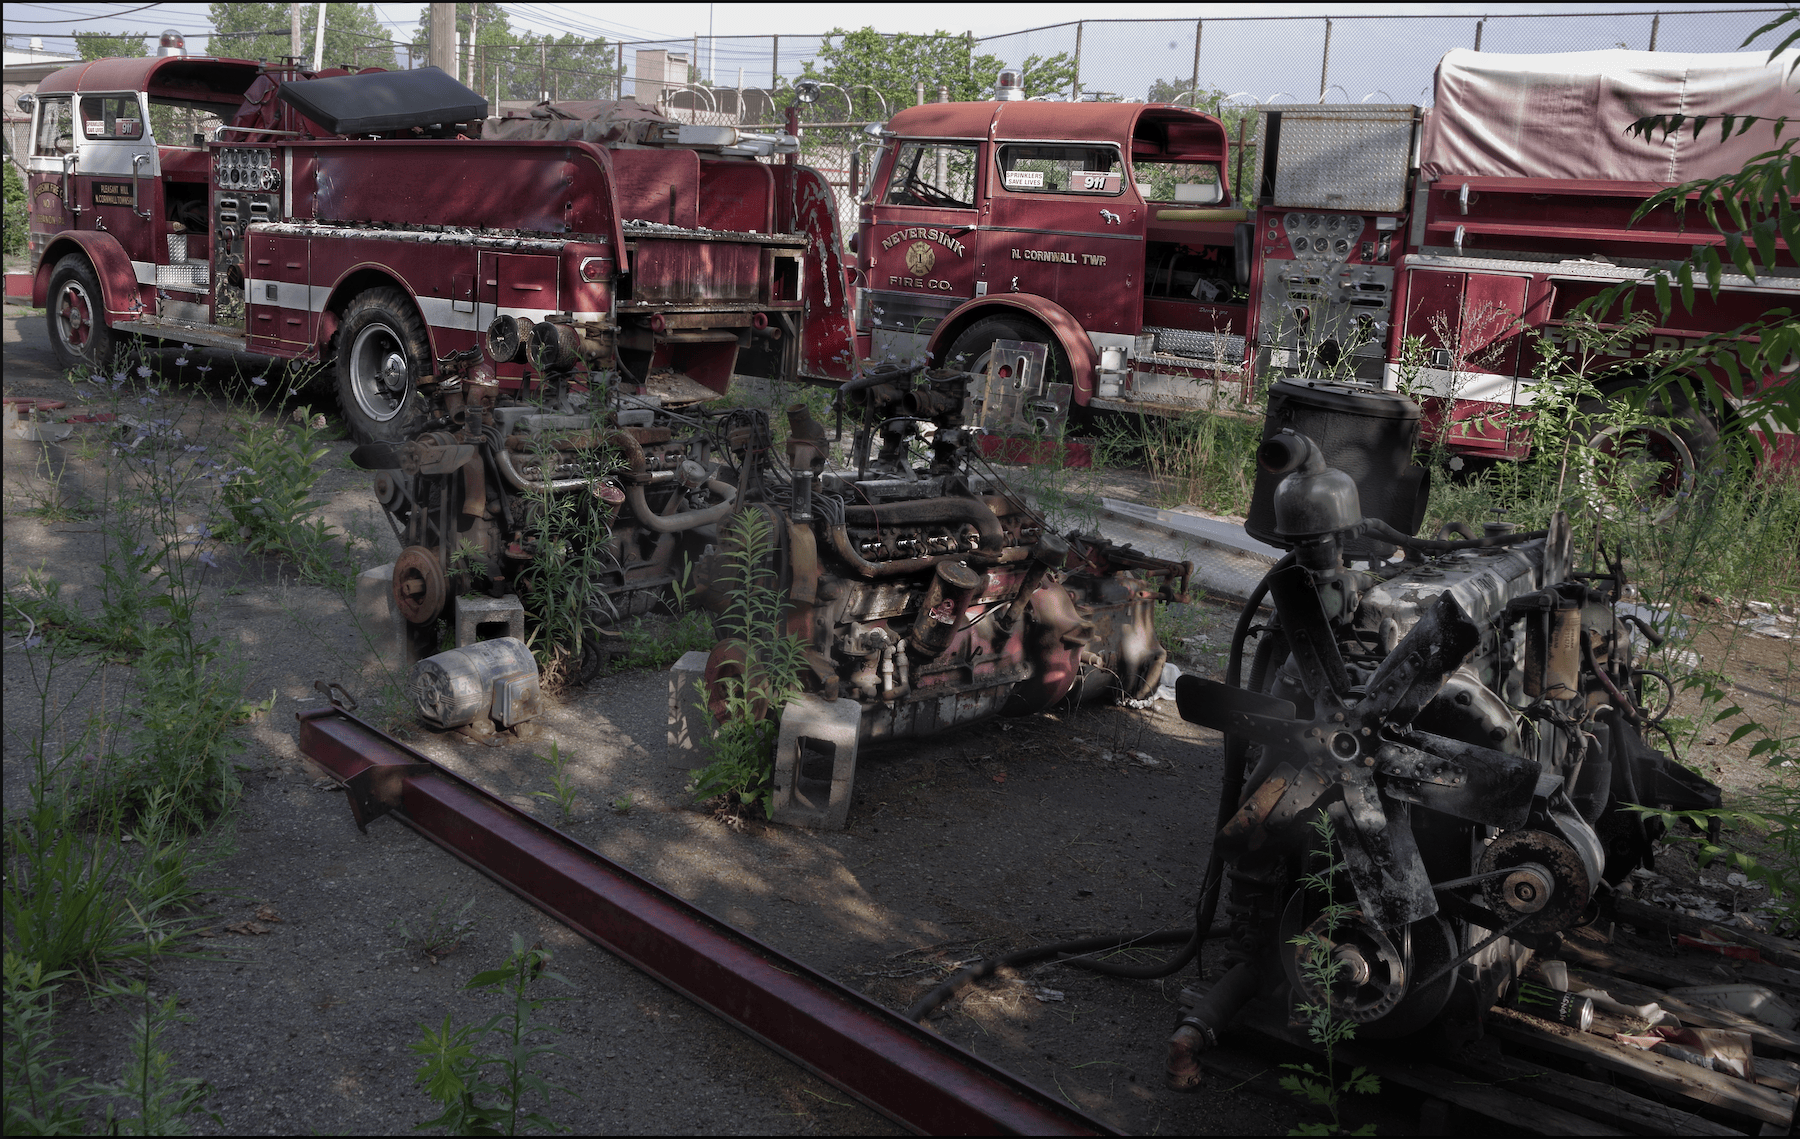 abandoned fire rucks in a Detroit yard